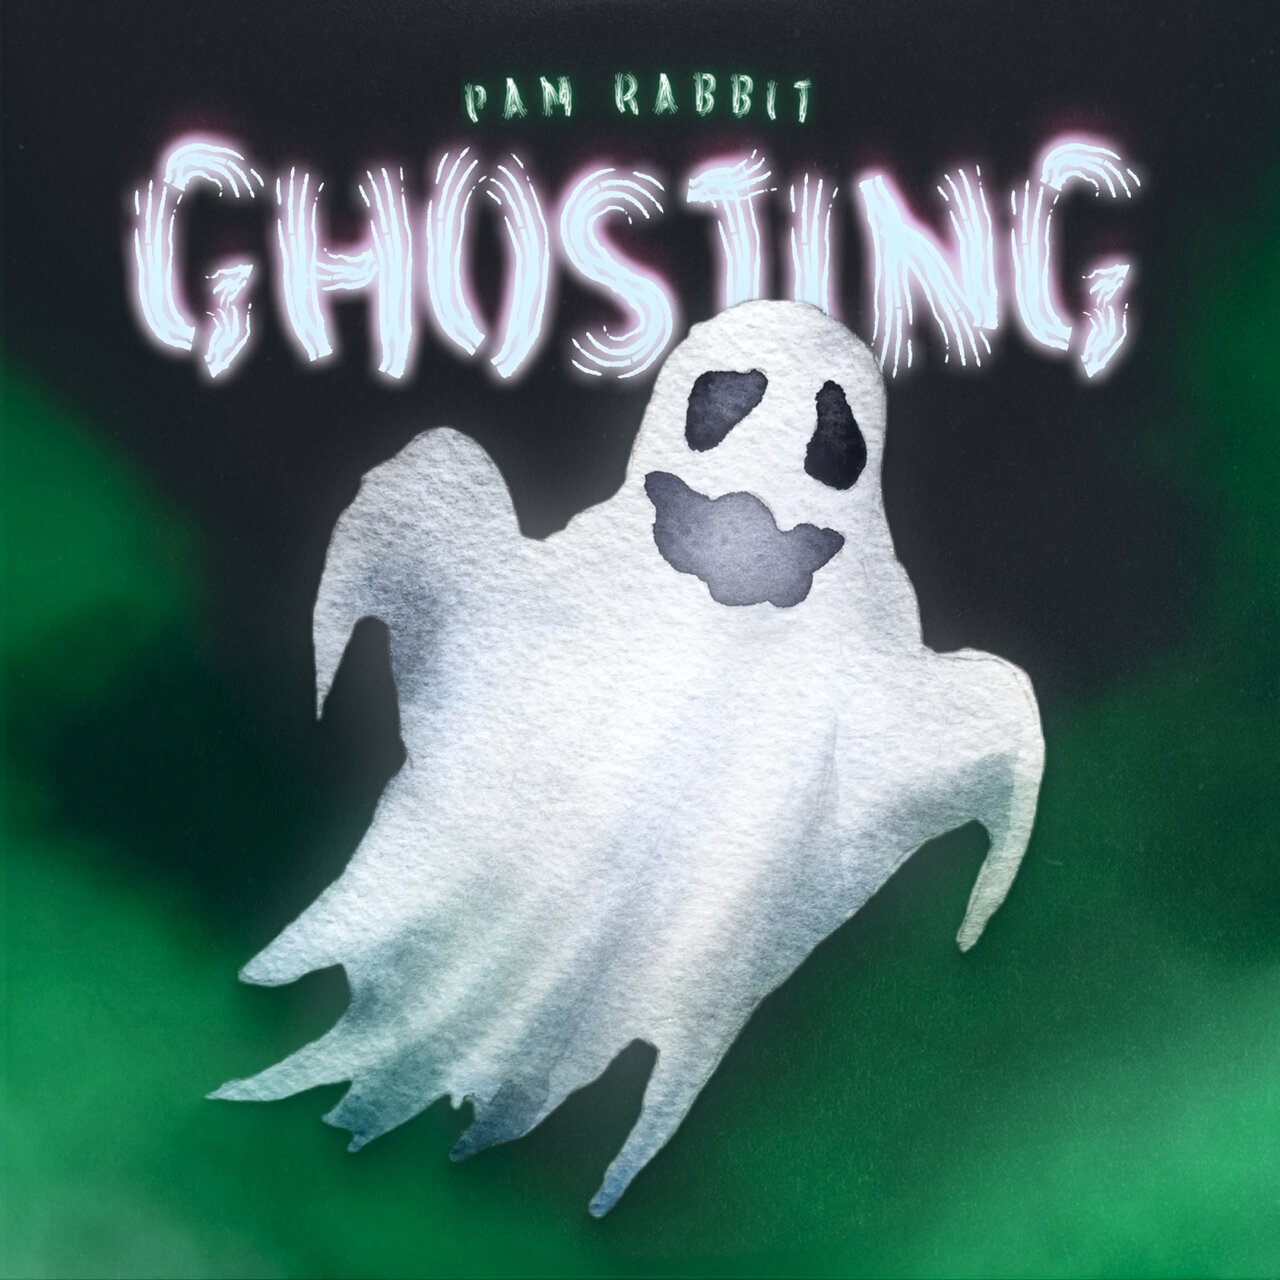 Pam Rabbit — ghosting cover artwork